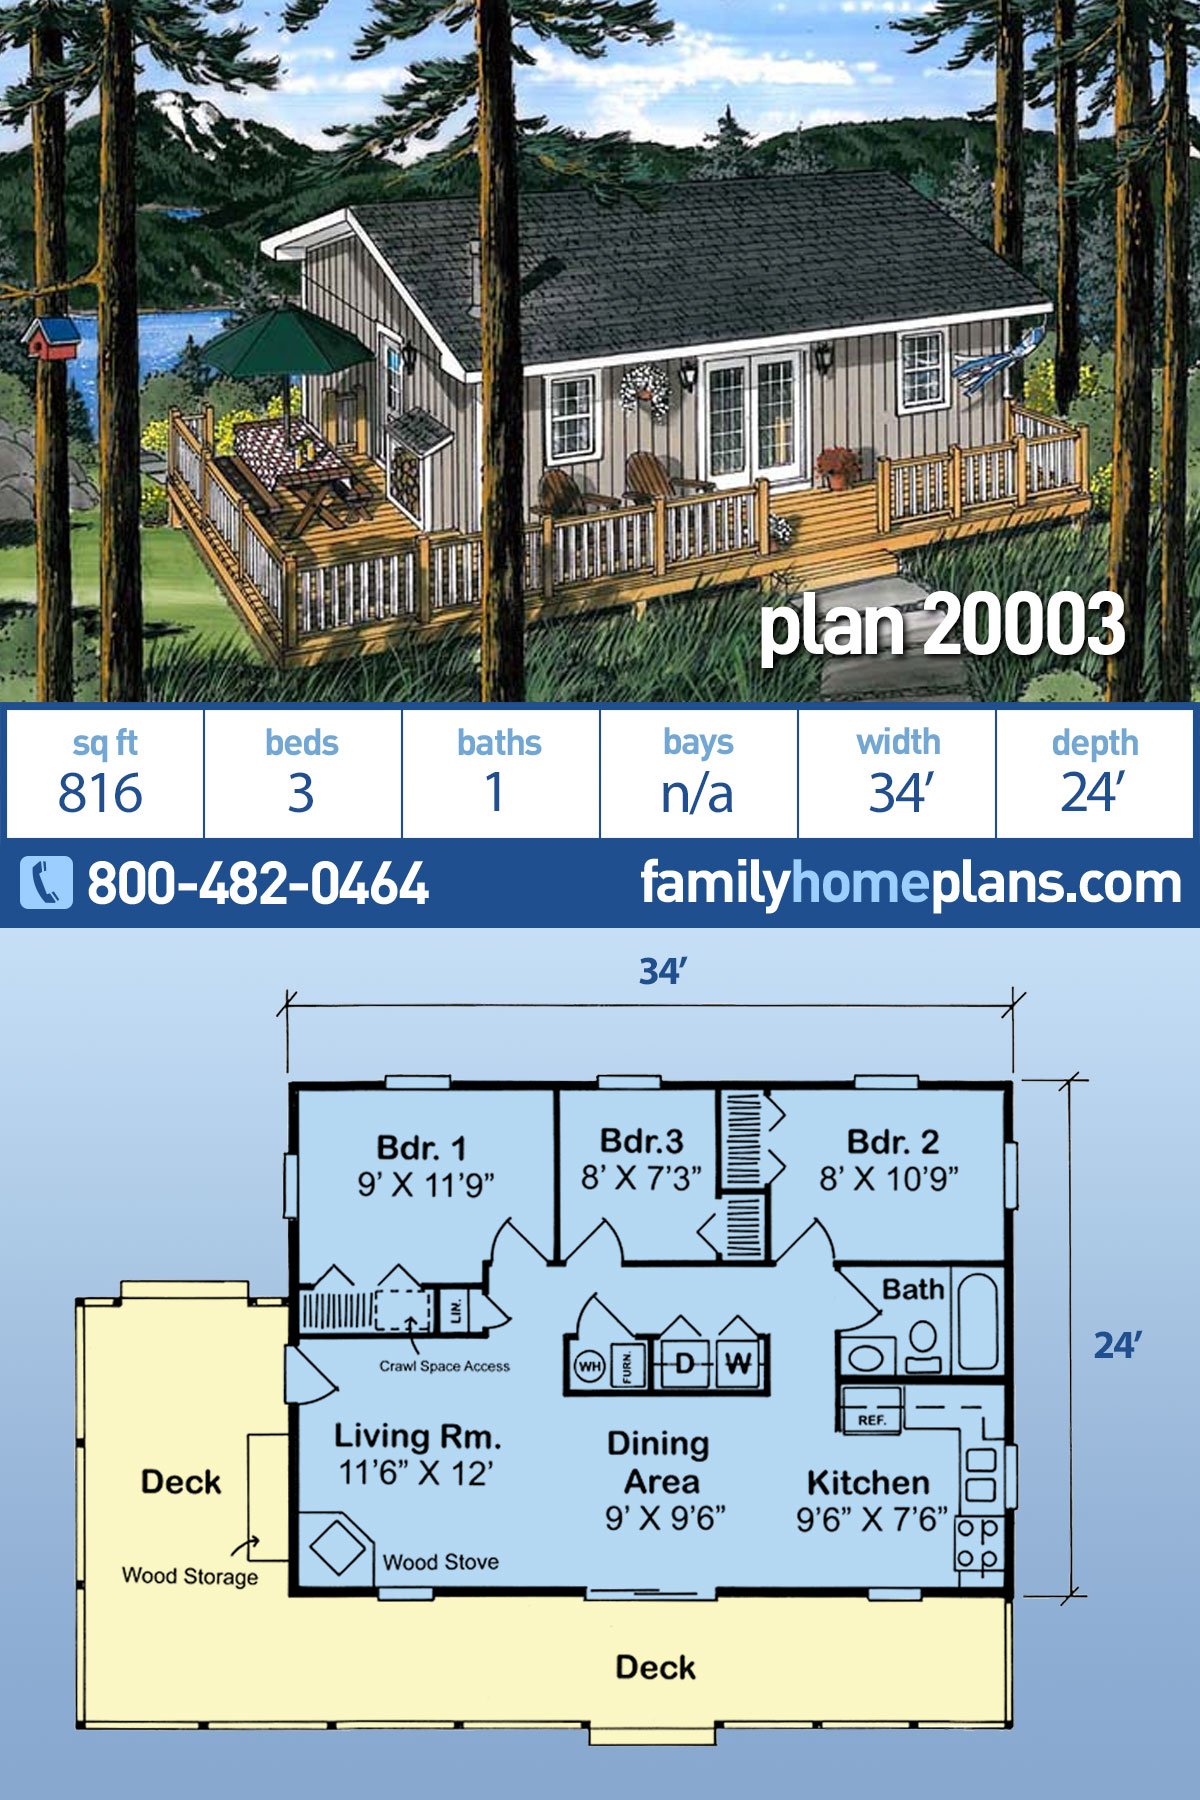 House Plan 20003